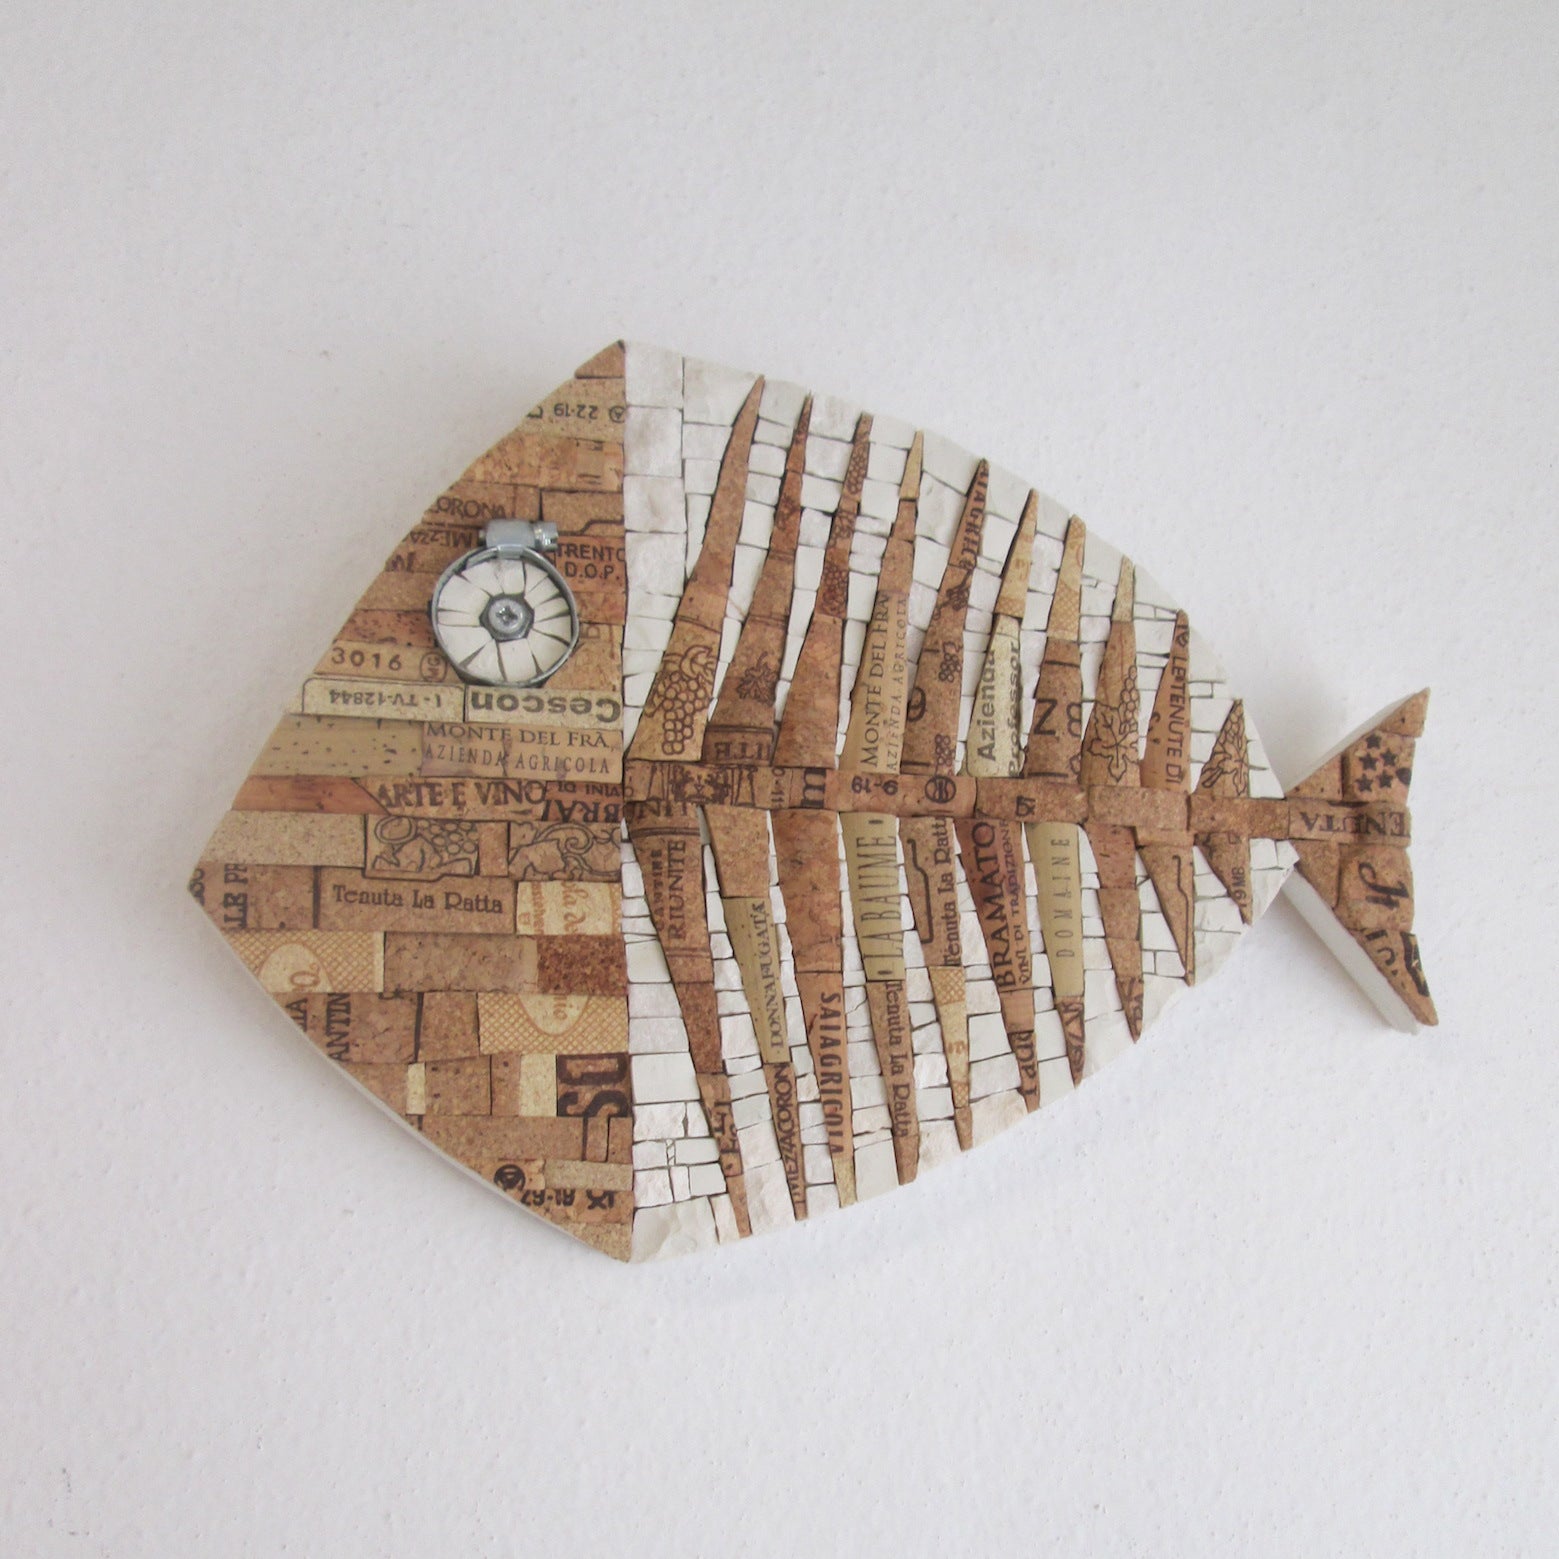 Fishbone cork art - Zama Labz